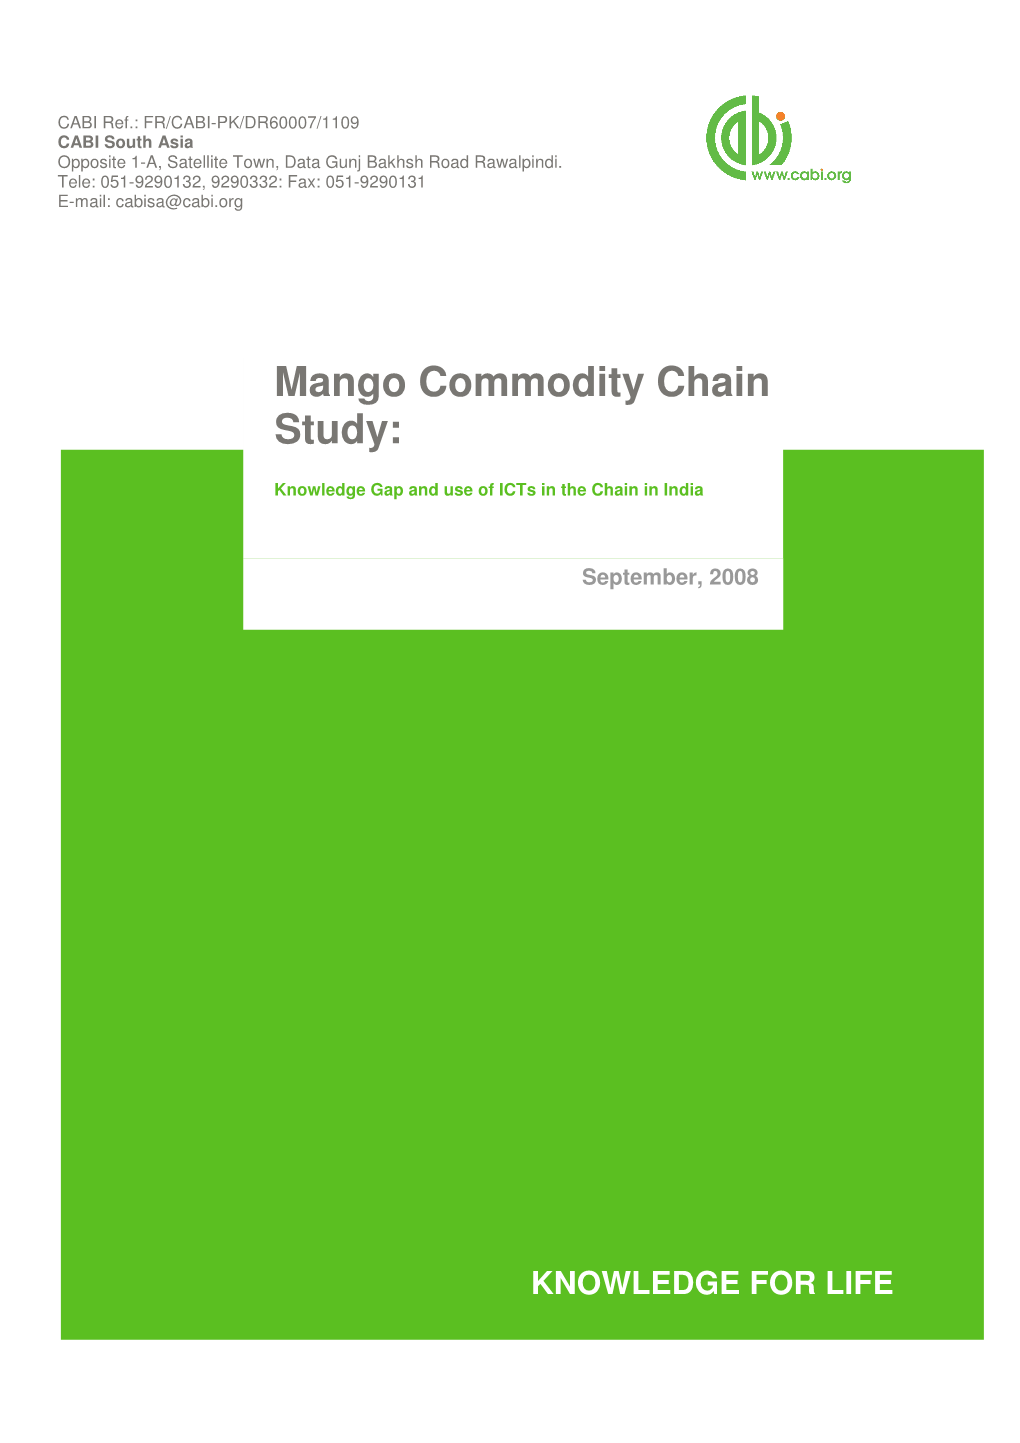 Mango Commodity Chain Study